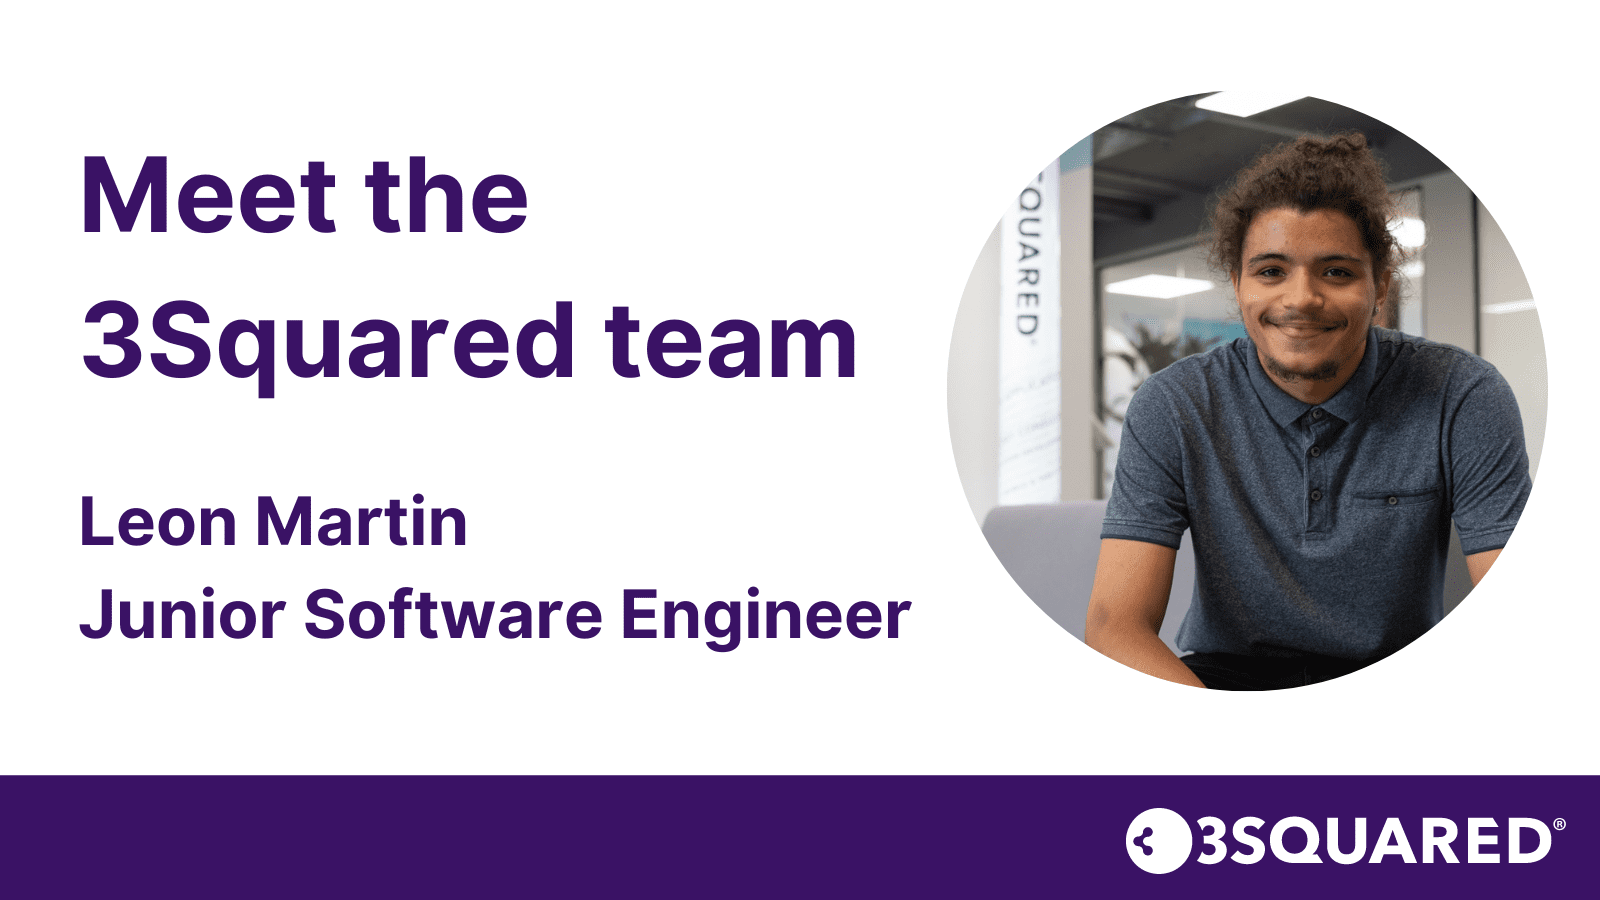 Leon Martin, Junior Software Engineer